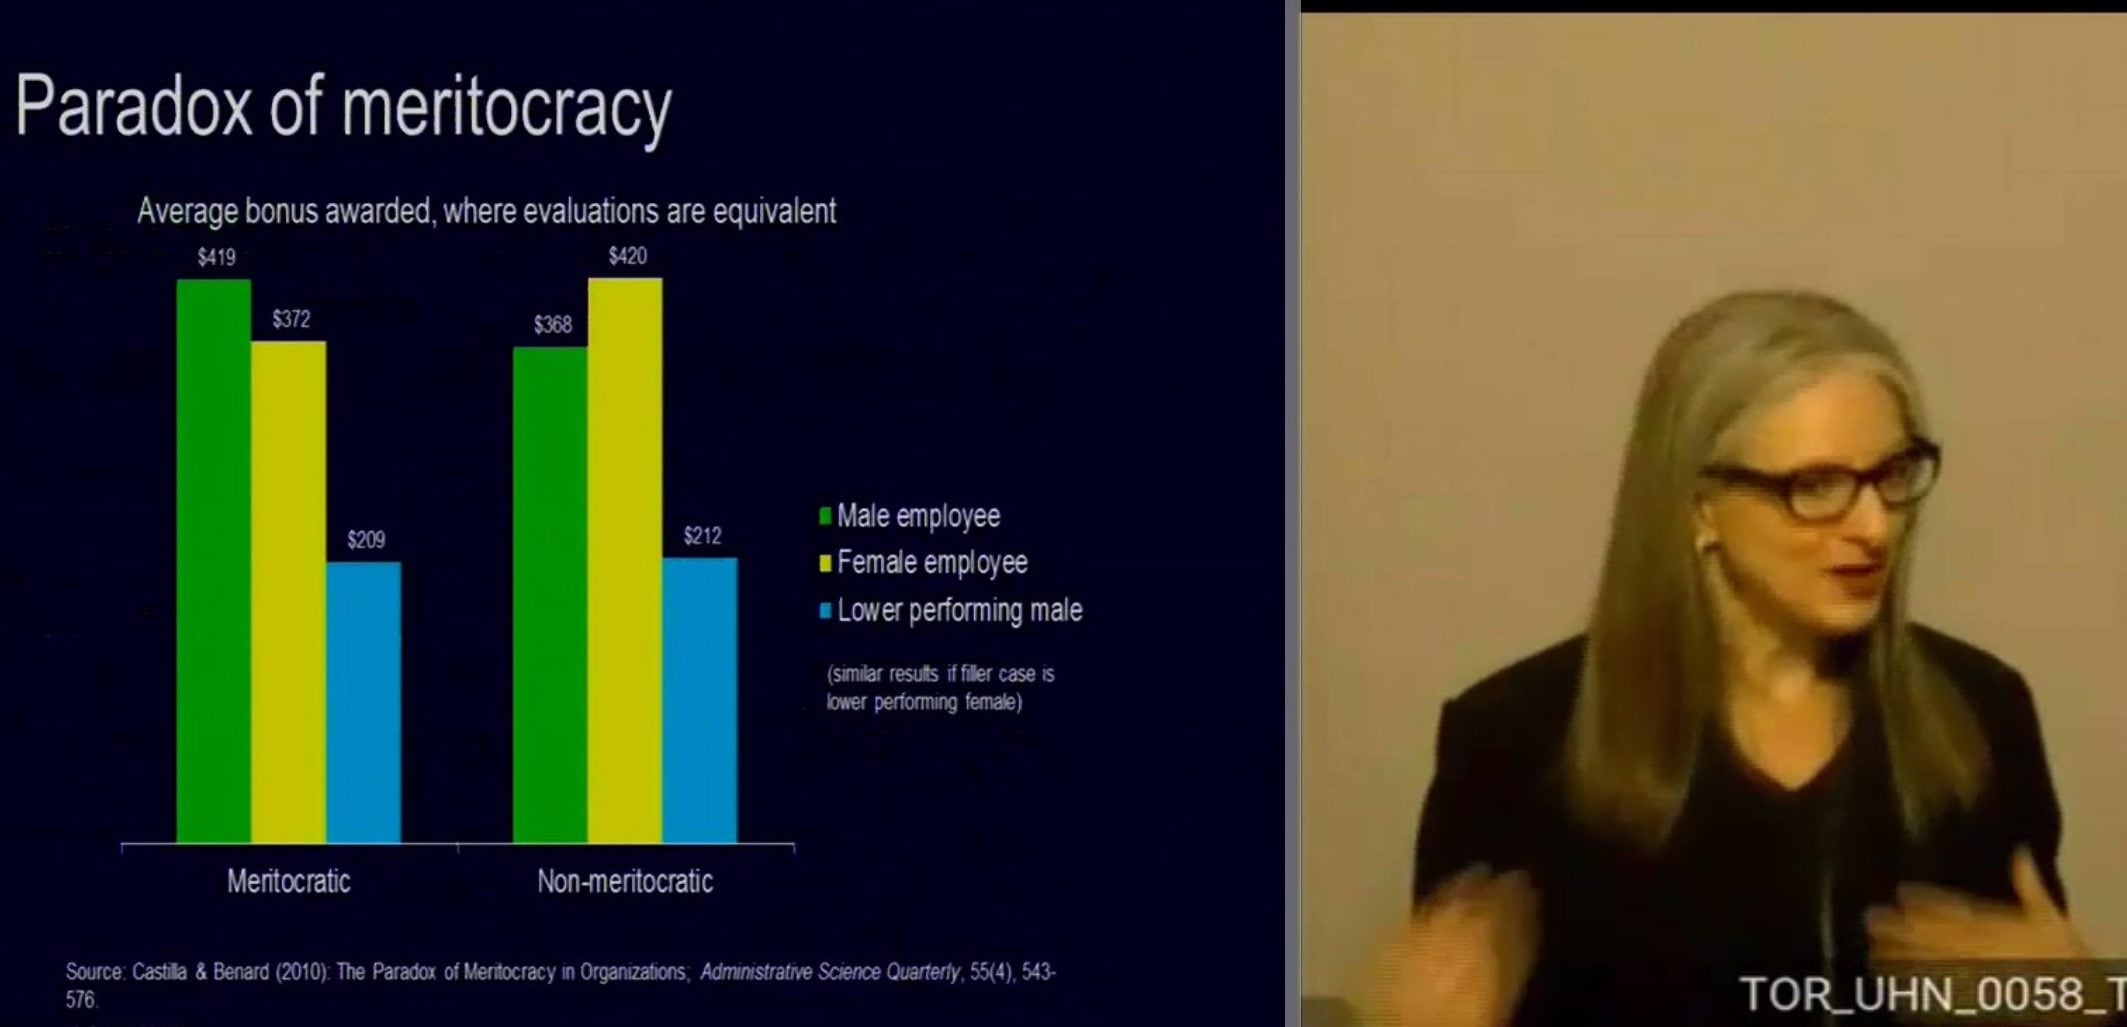 Sarah Kaplan presenting Paradox of meritocracy